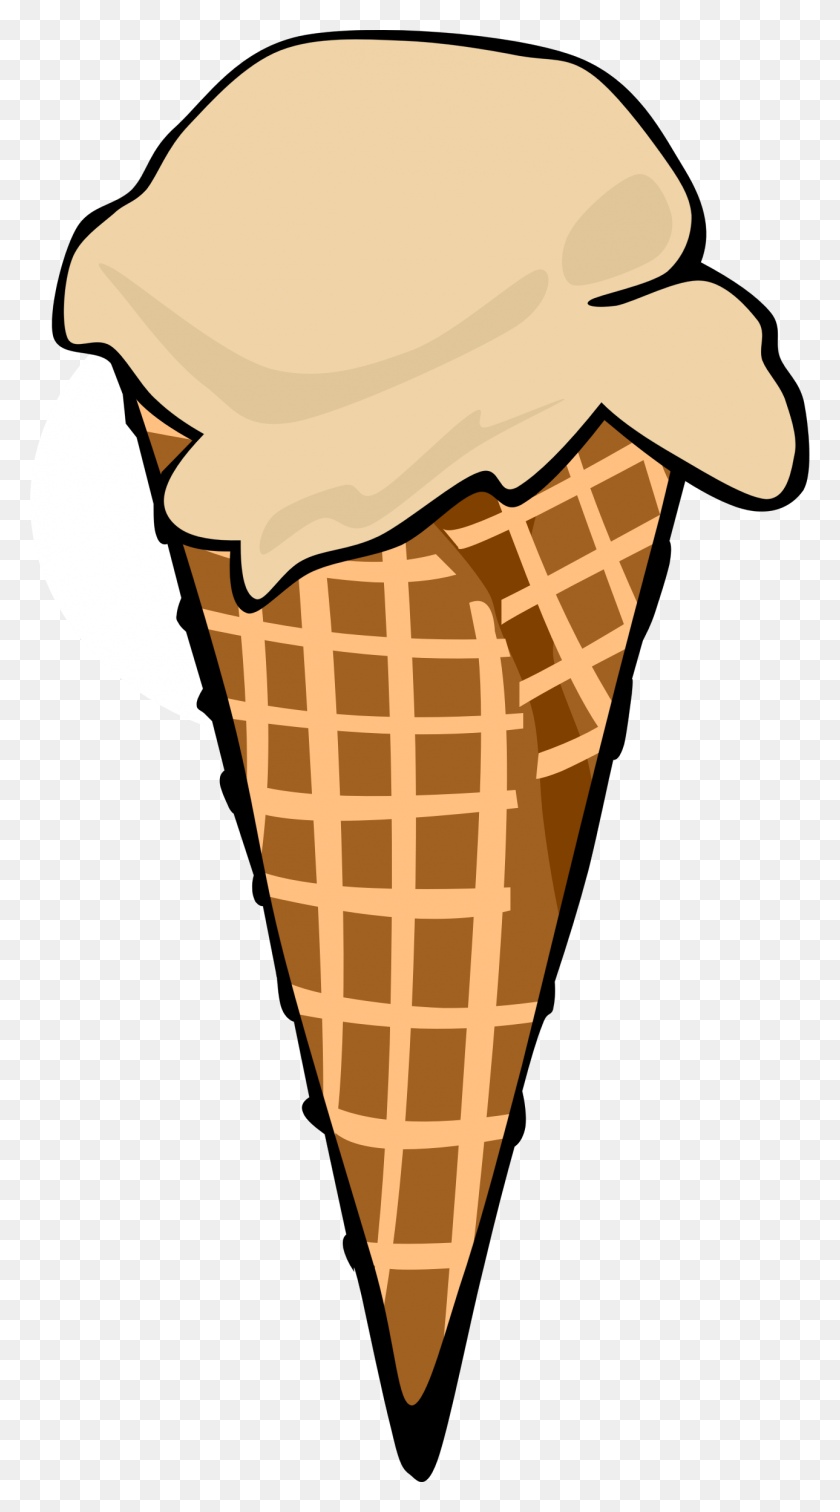 1289x2400 Free Images Of Ice Cream Cones Download Free Clip Art Free Clip - Pistachio Clipart